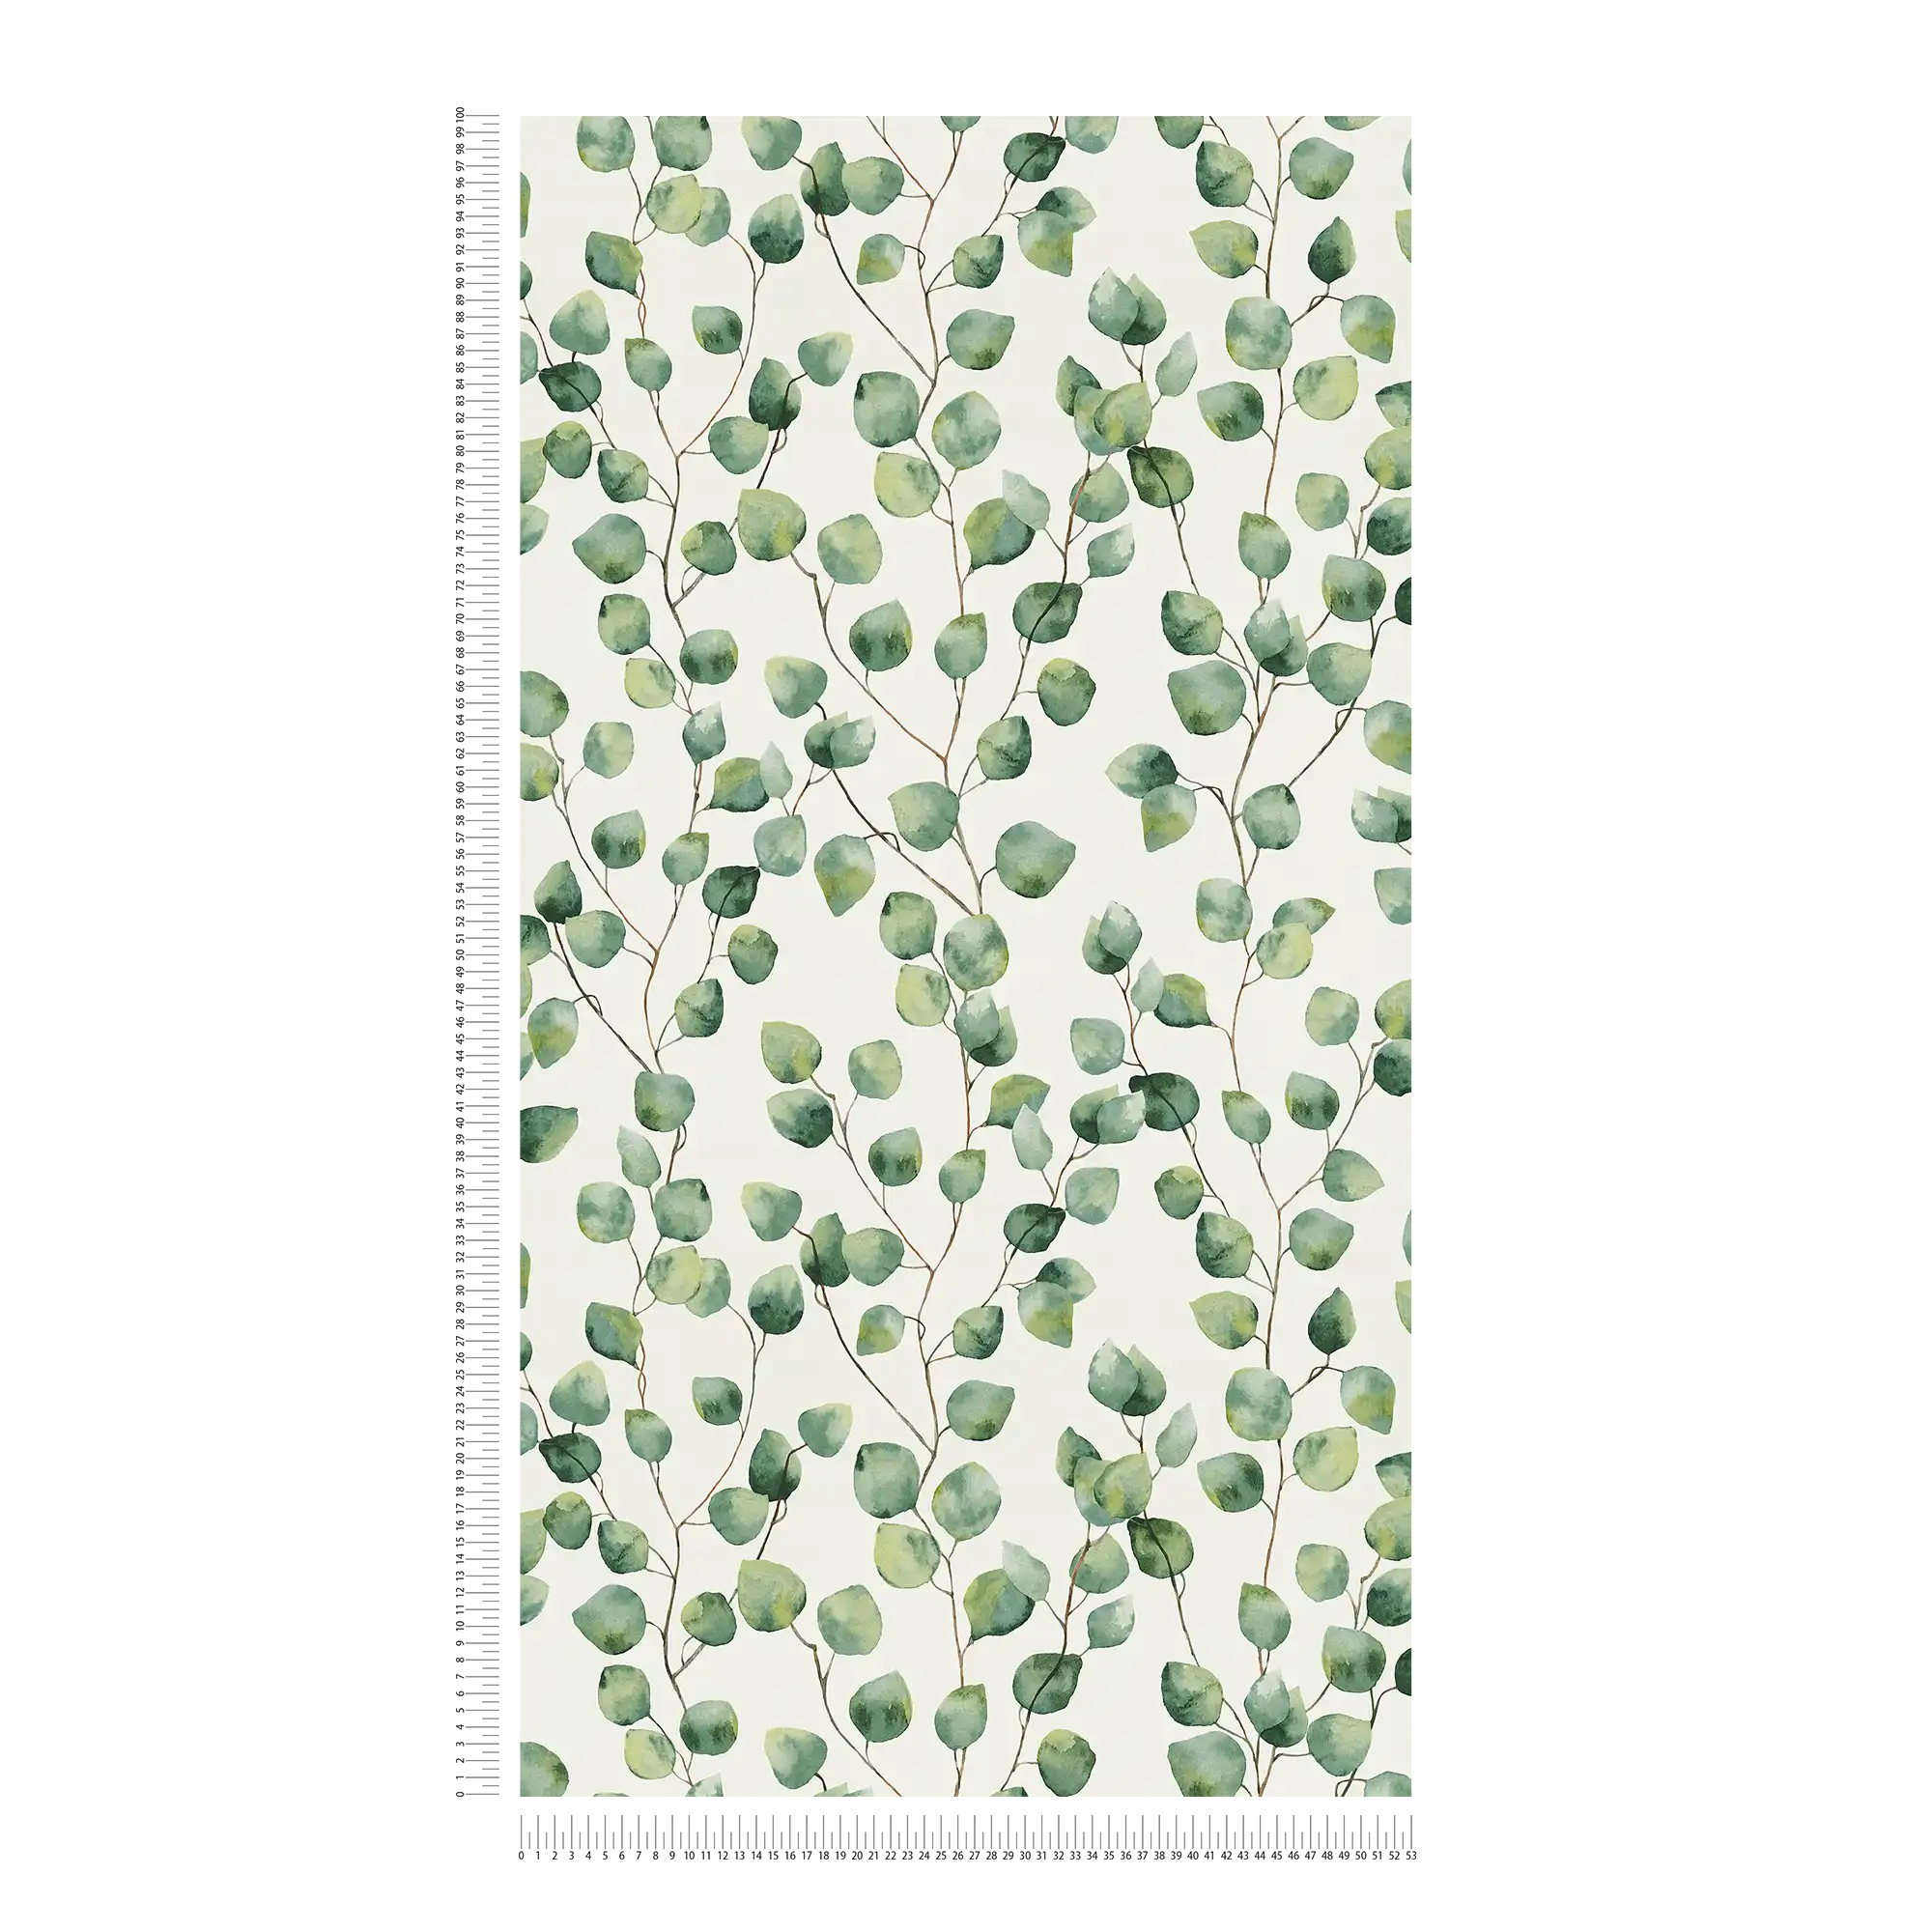             Carta da parati in stile acquerello "Tendini di foglie" - verde, bianco
        